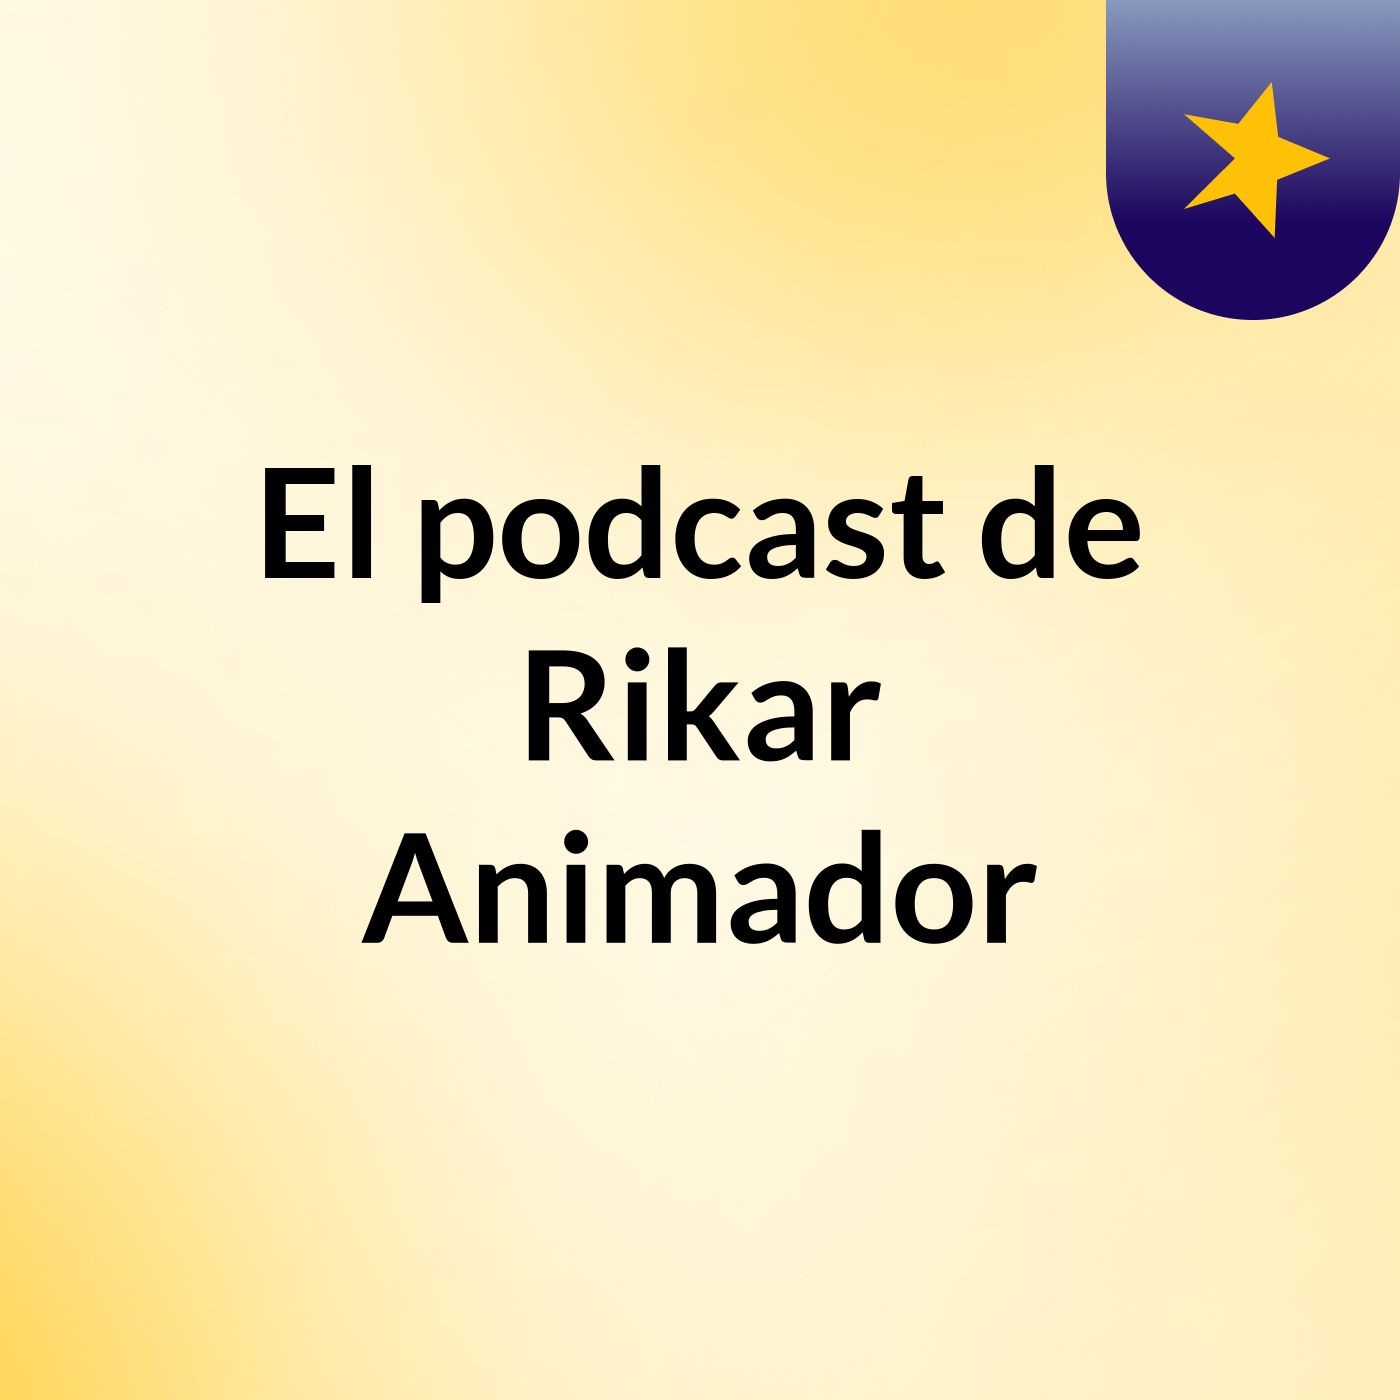 El podcast de Rikar Animador